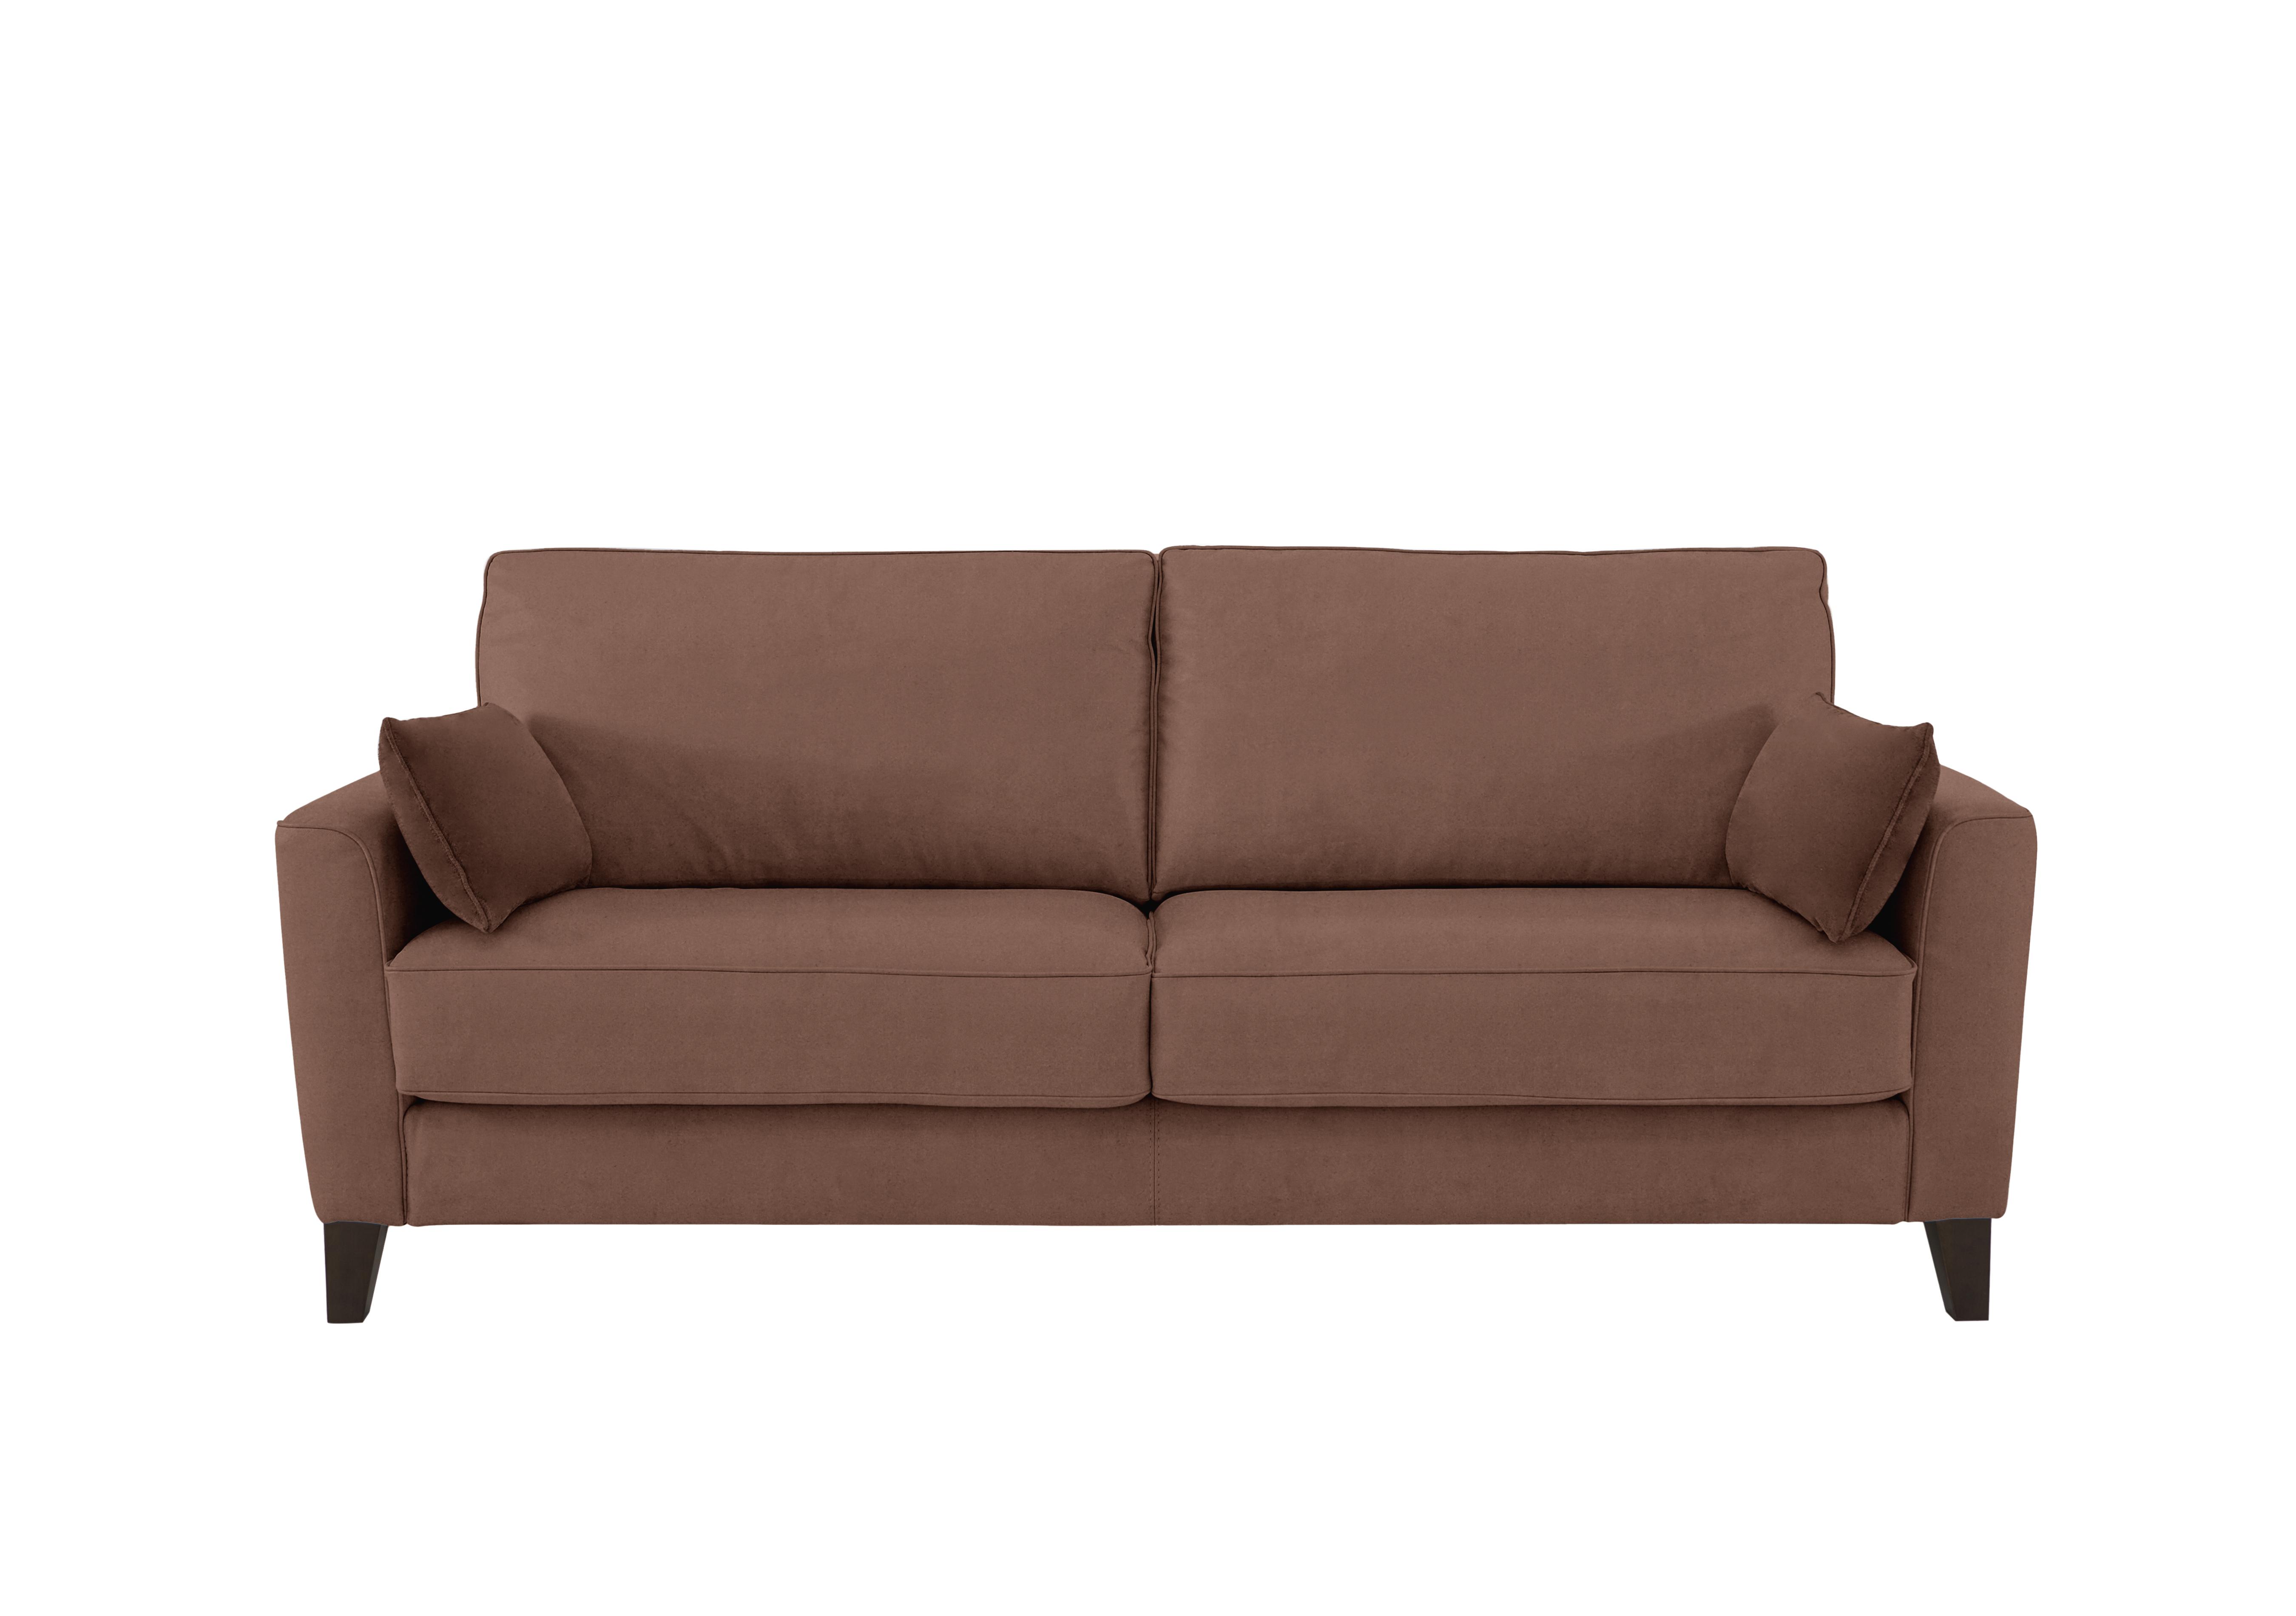 Brondby 3 Seater Fabric Sofa in Bfa-Blj-R05 Hazelnut on Furniture Village